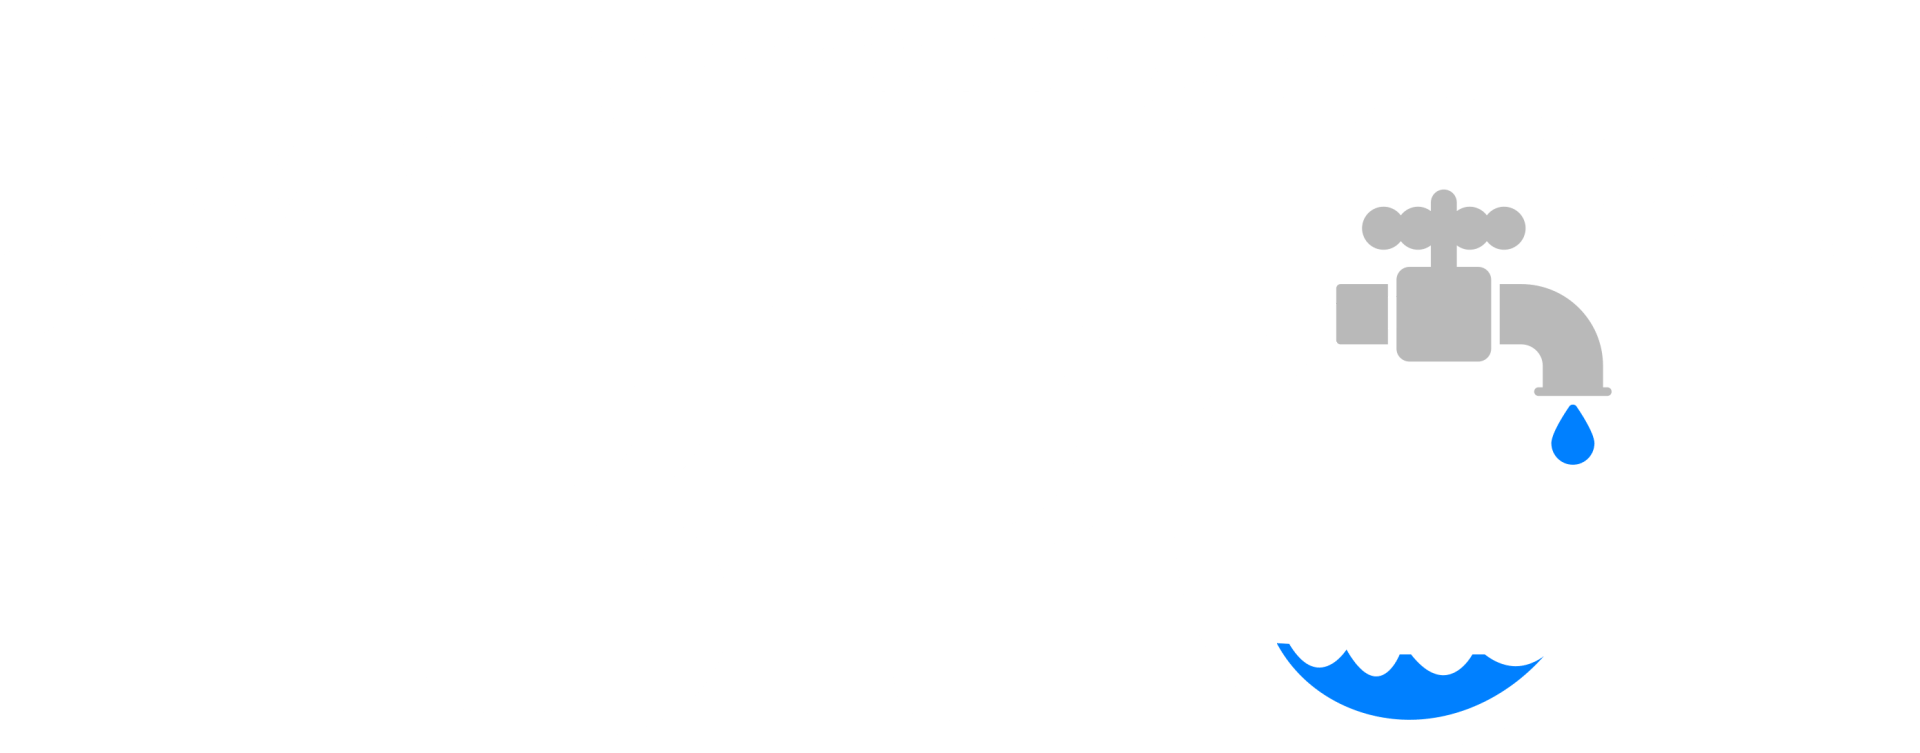 Bonner Plumbing Company in Arkadelphia, AR